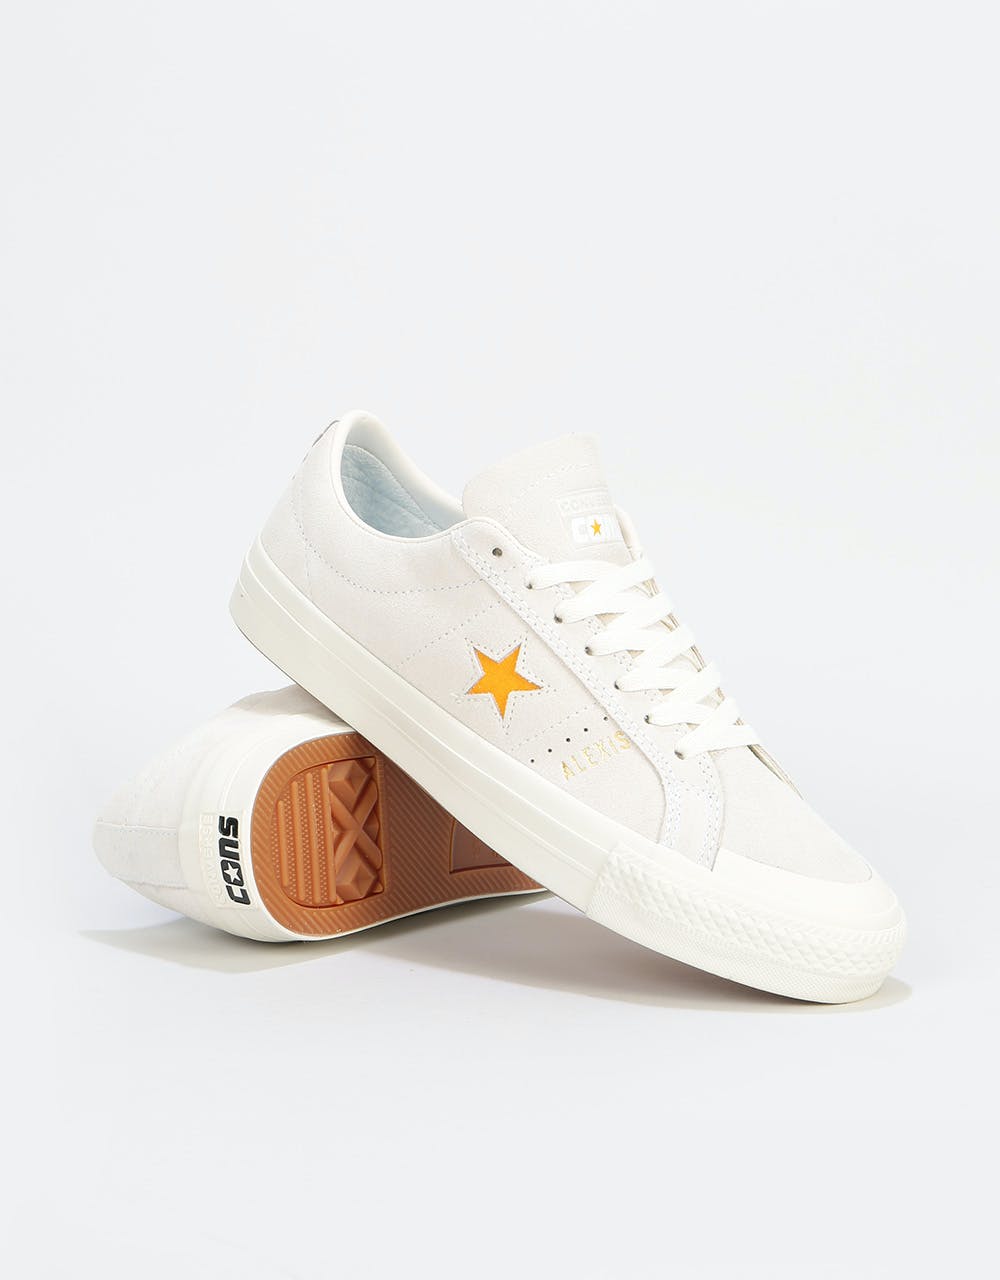 Converse One Star Pro Ox Alexis Sablone Skate Shoes - White/Coast/University Gold